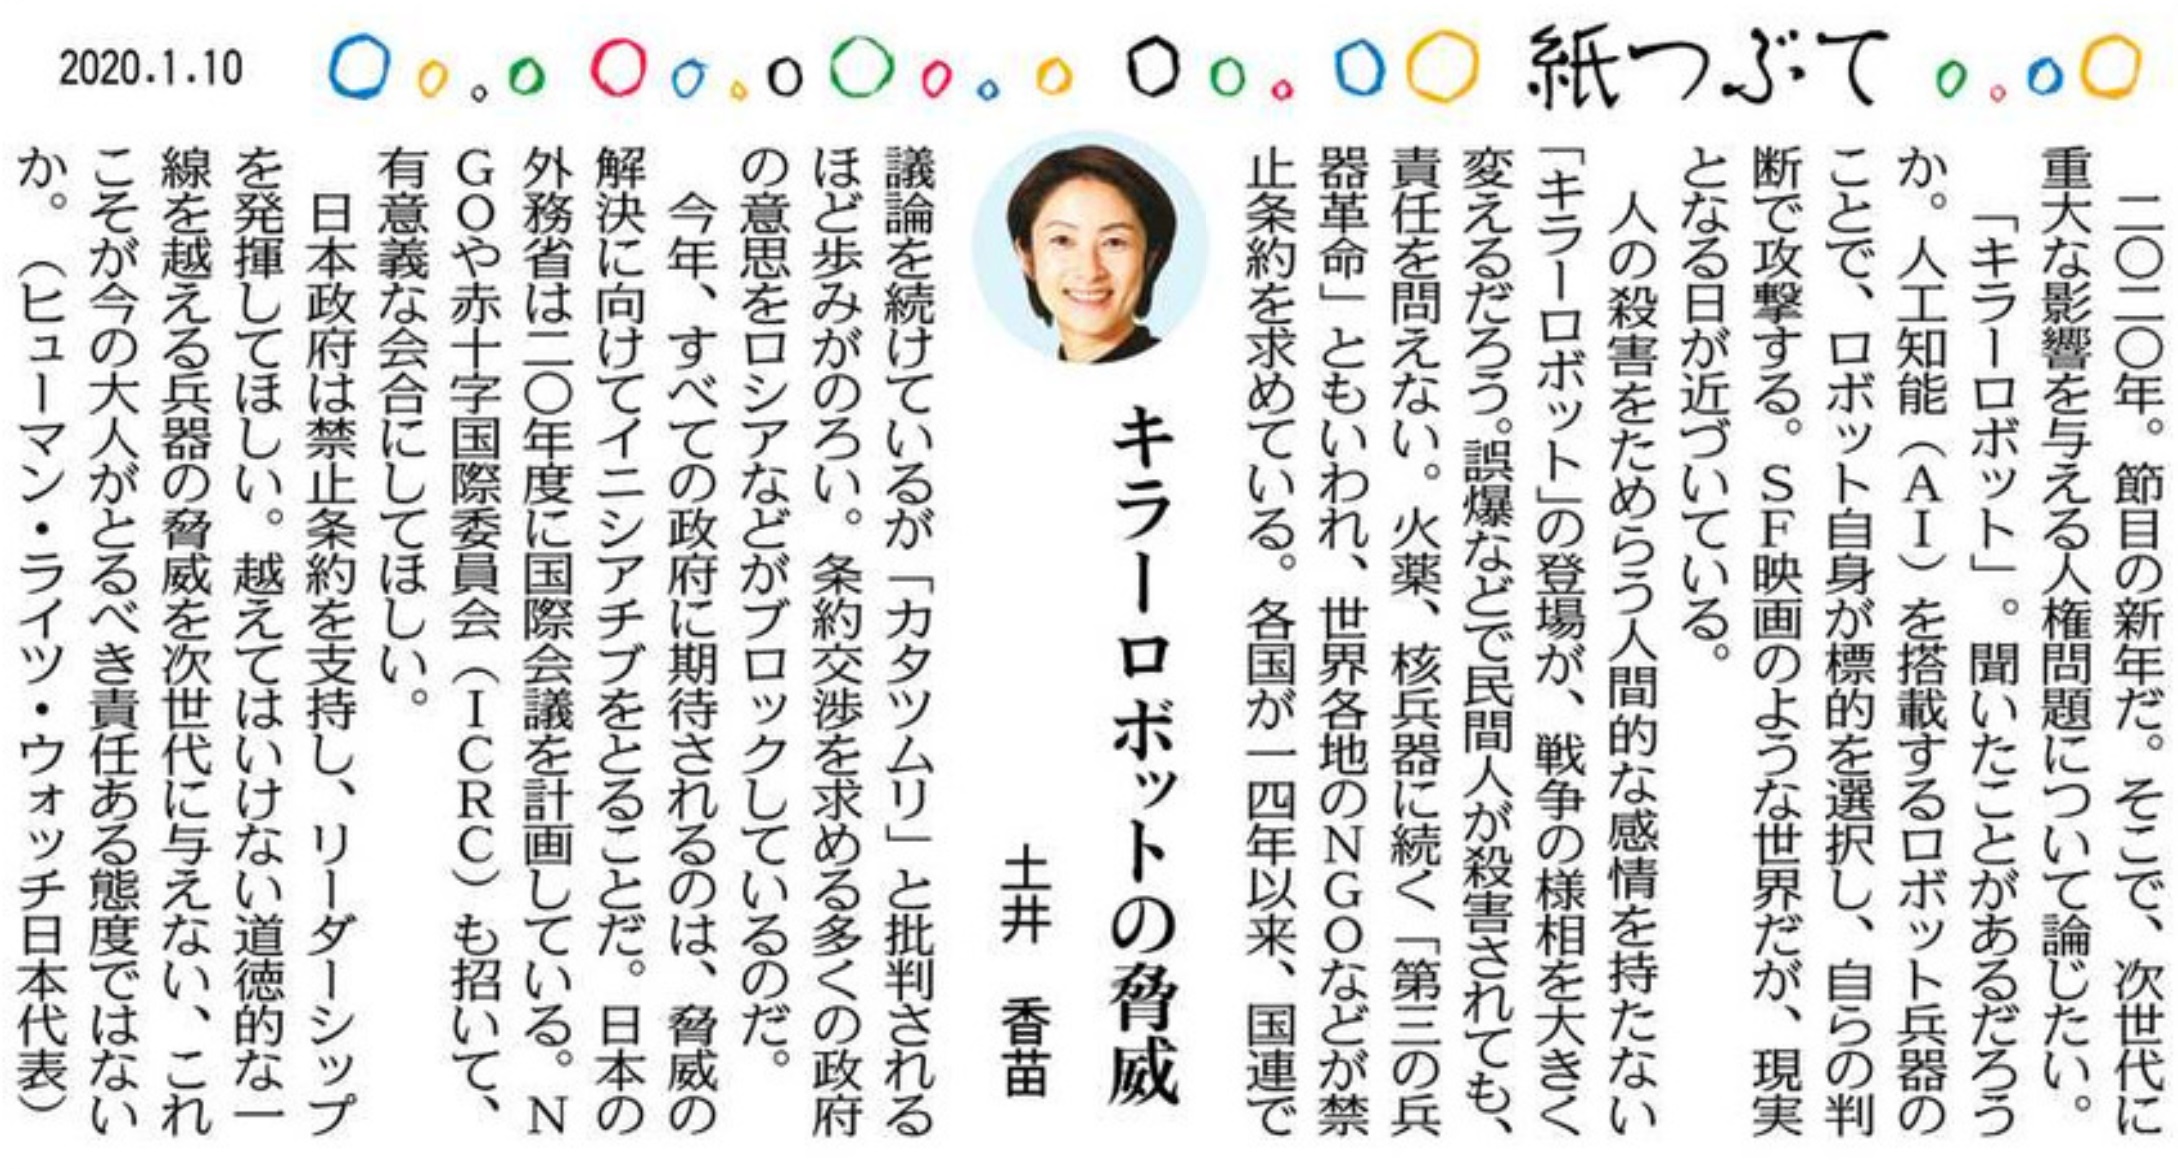 Tokyo Newspaper 2020/01/10 Kanae Doi